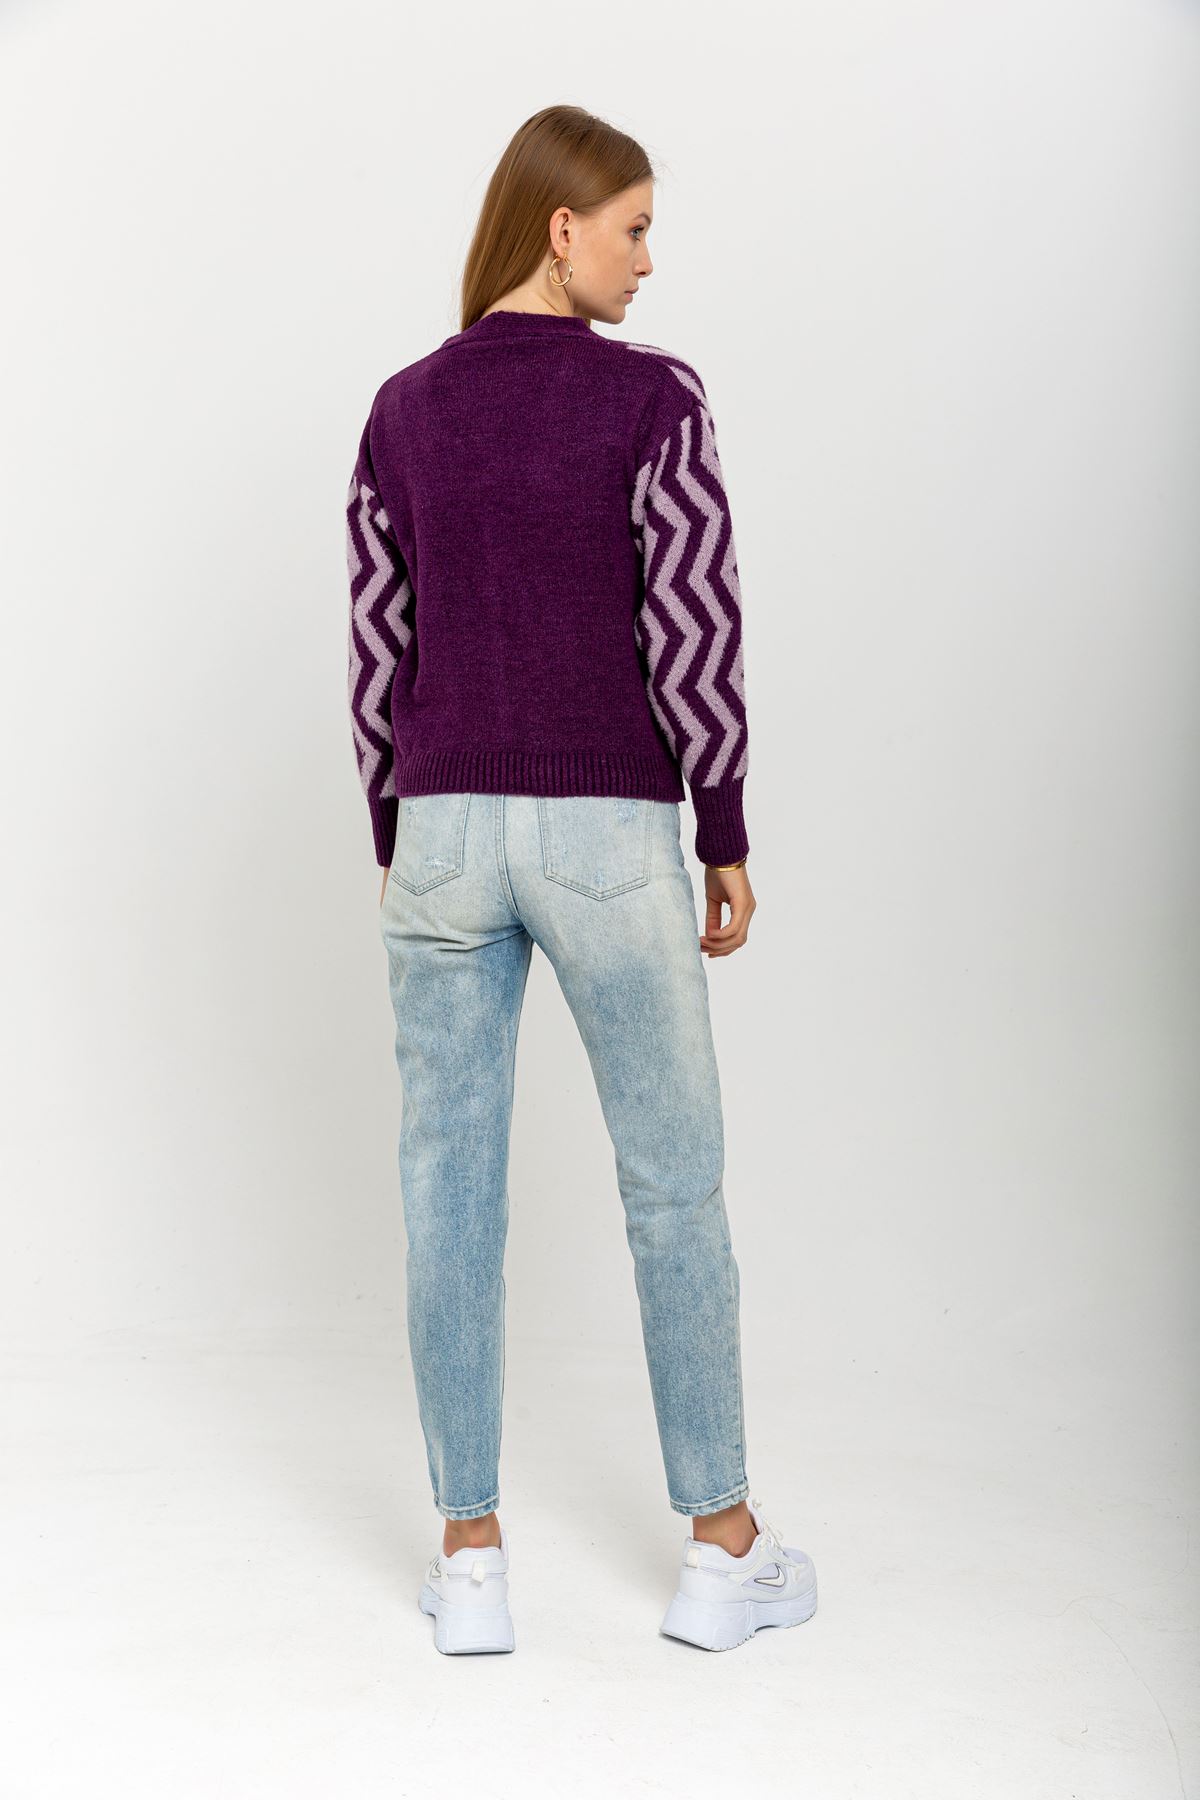 Knitwear Fabric Long Sleeve V-Neck Short Fringed Women Cardigan - Purple